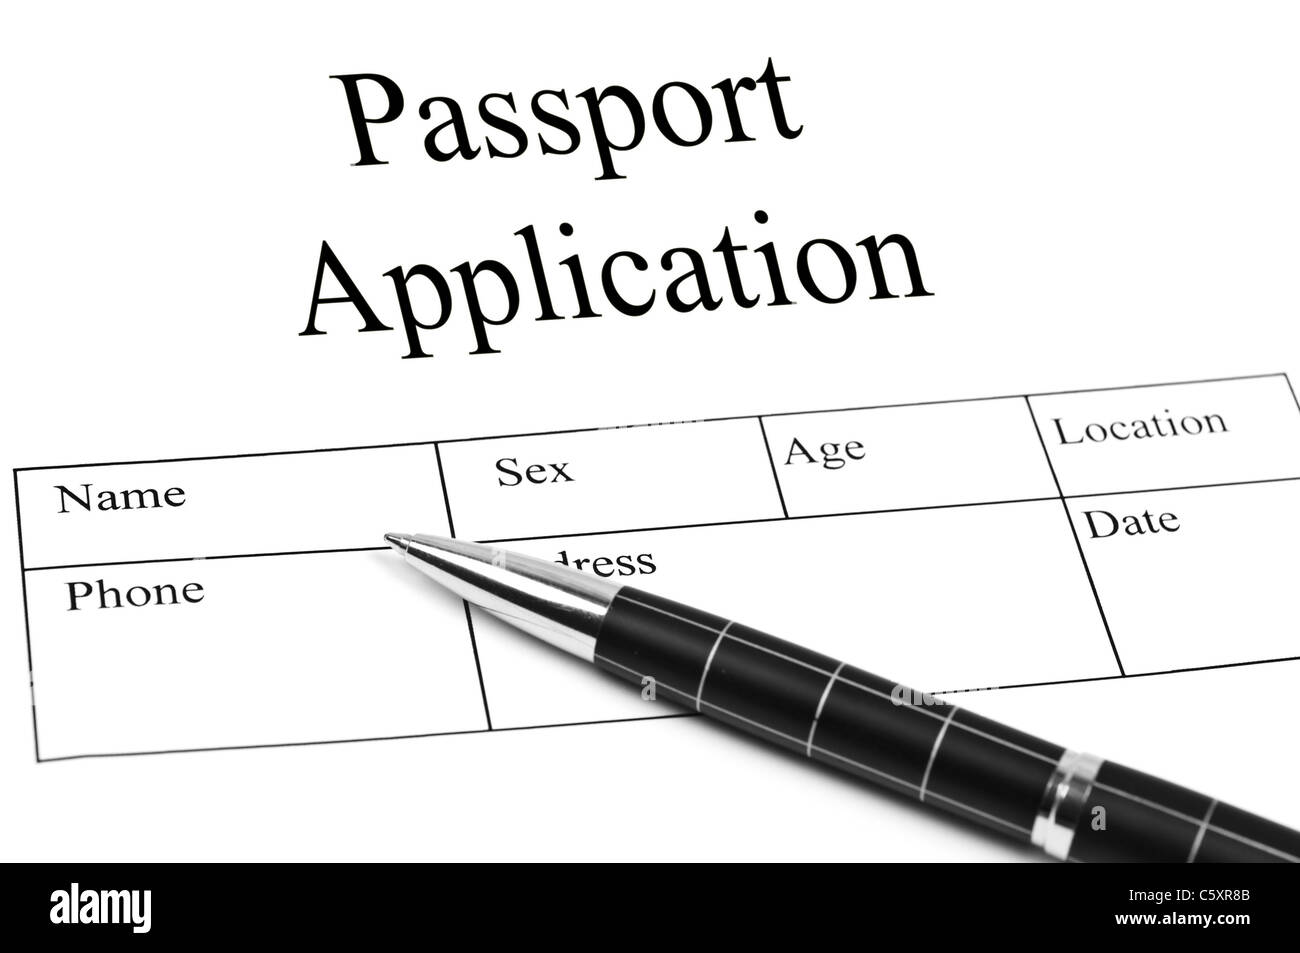 Passport application Stock Photo